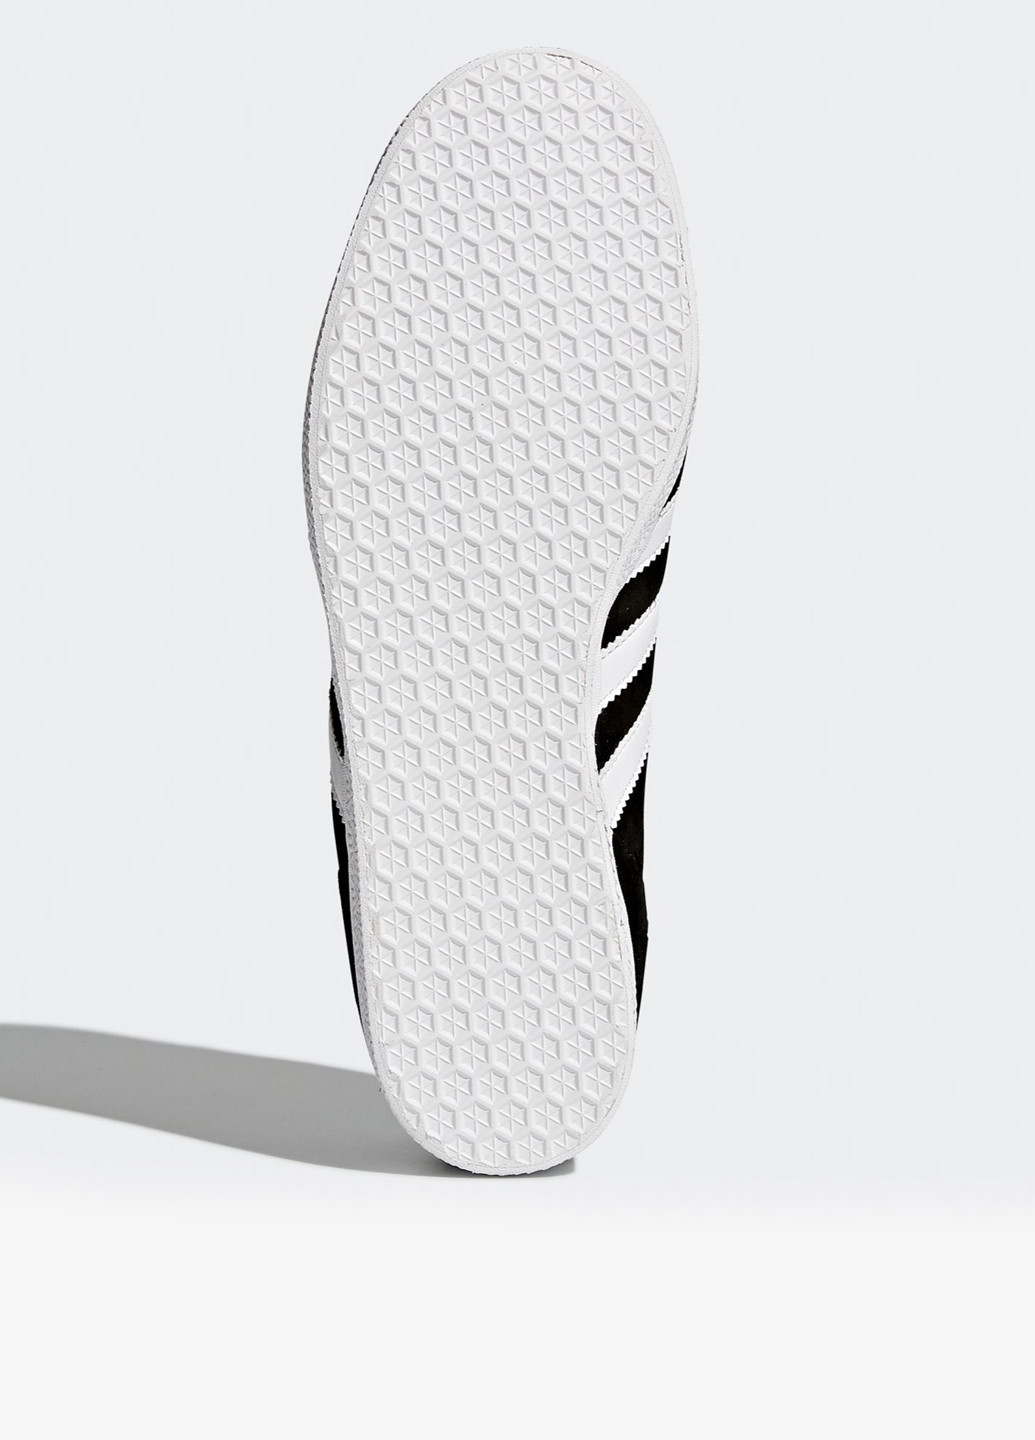 Чорні всесезонні кросівки adidas GAZELLE ORIGINALS